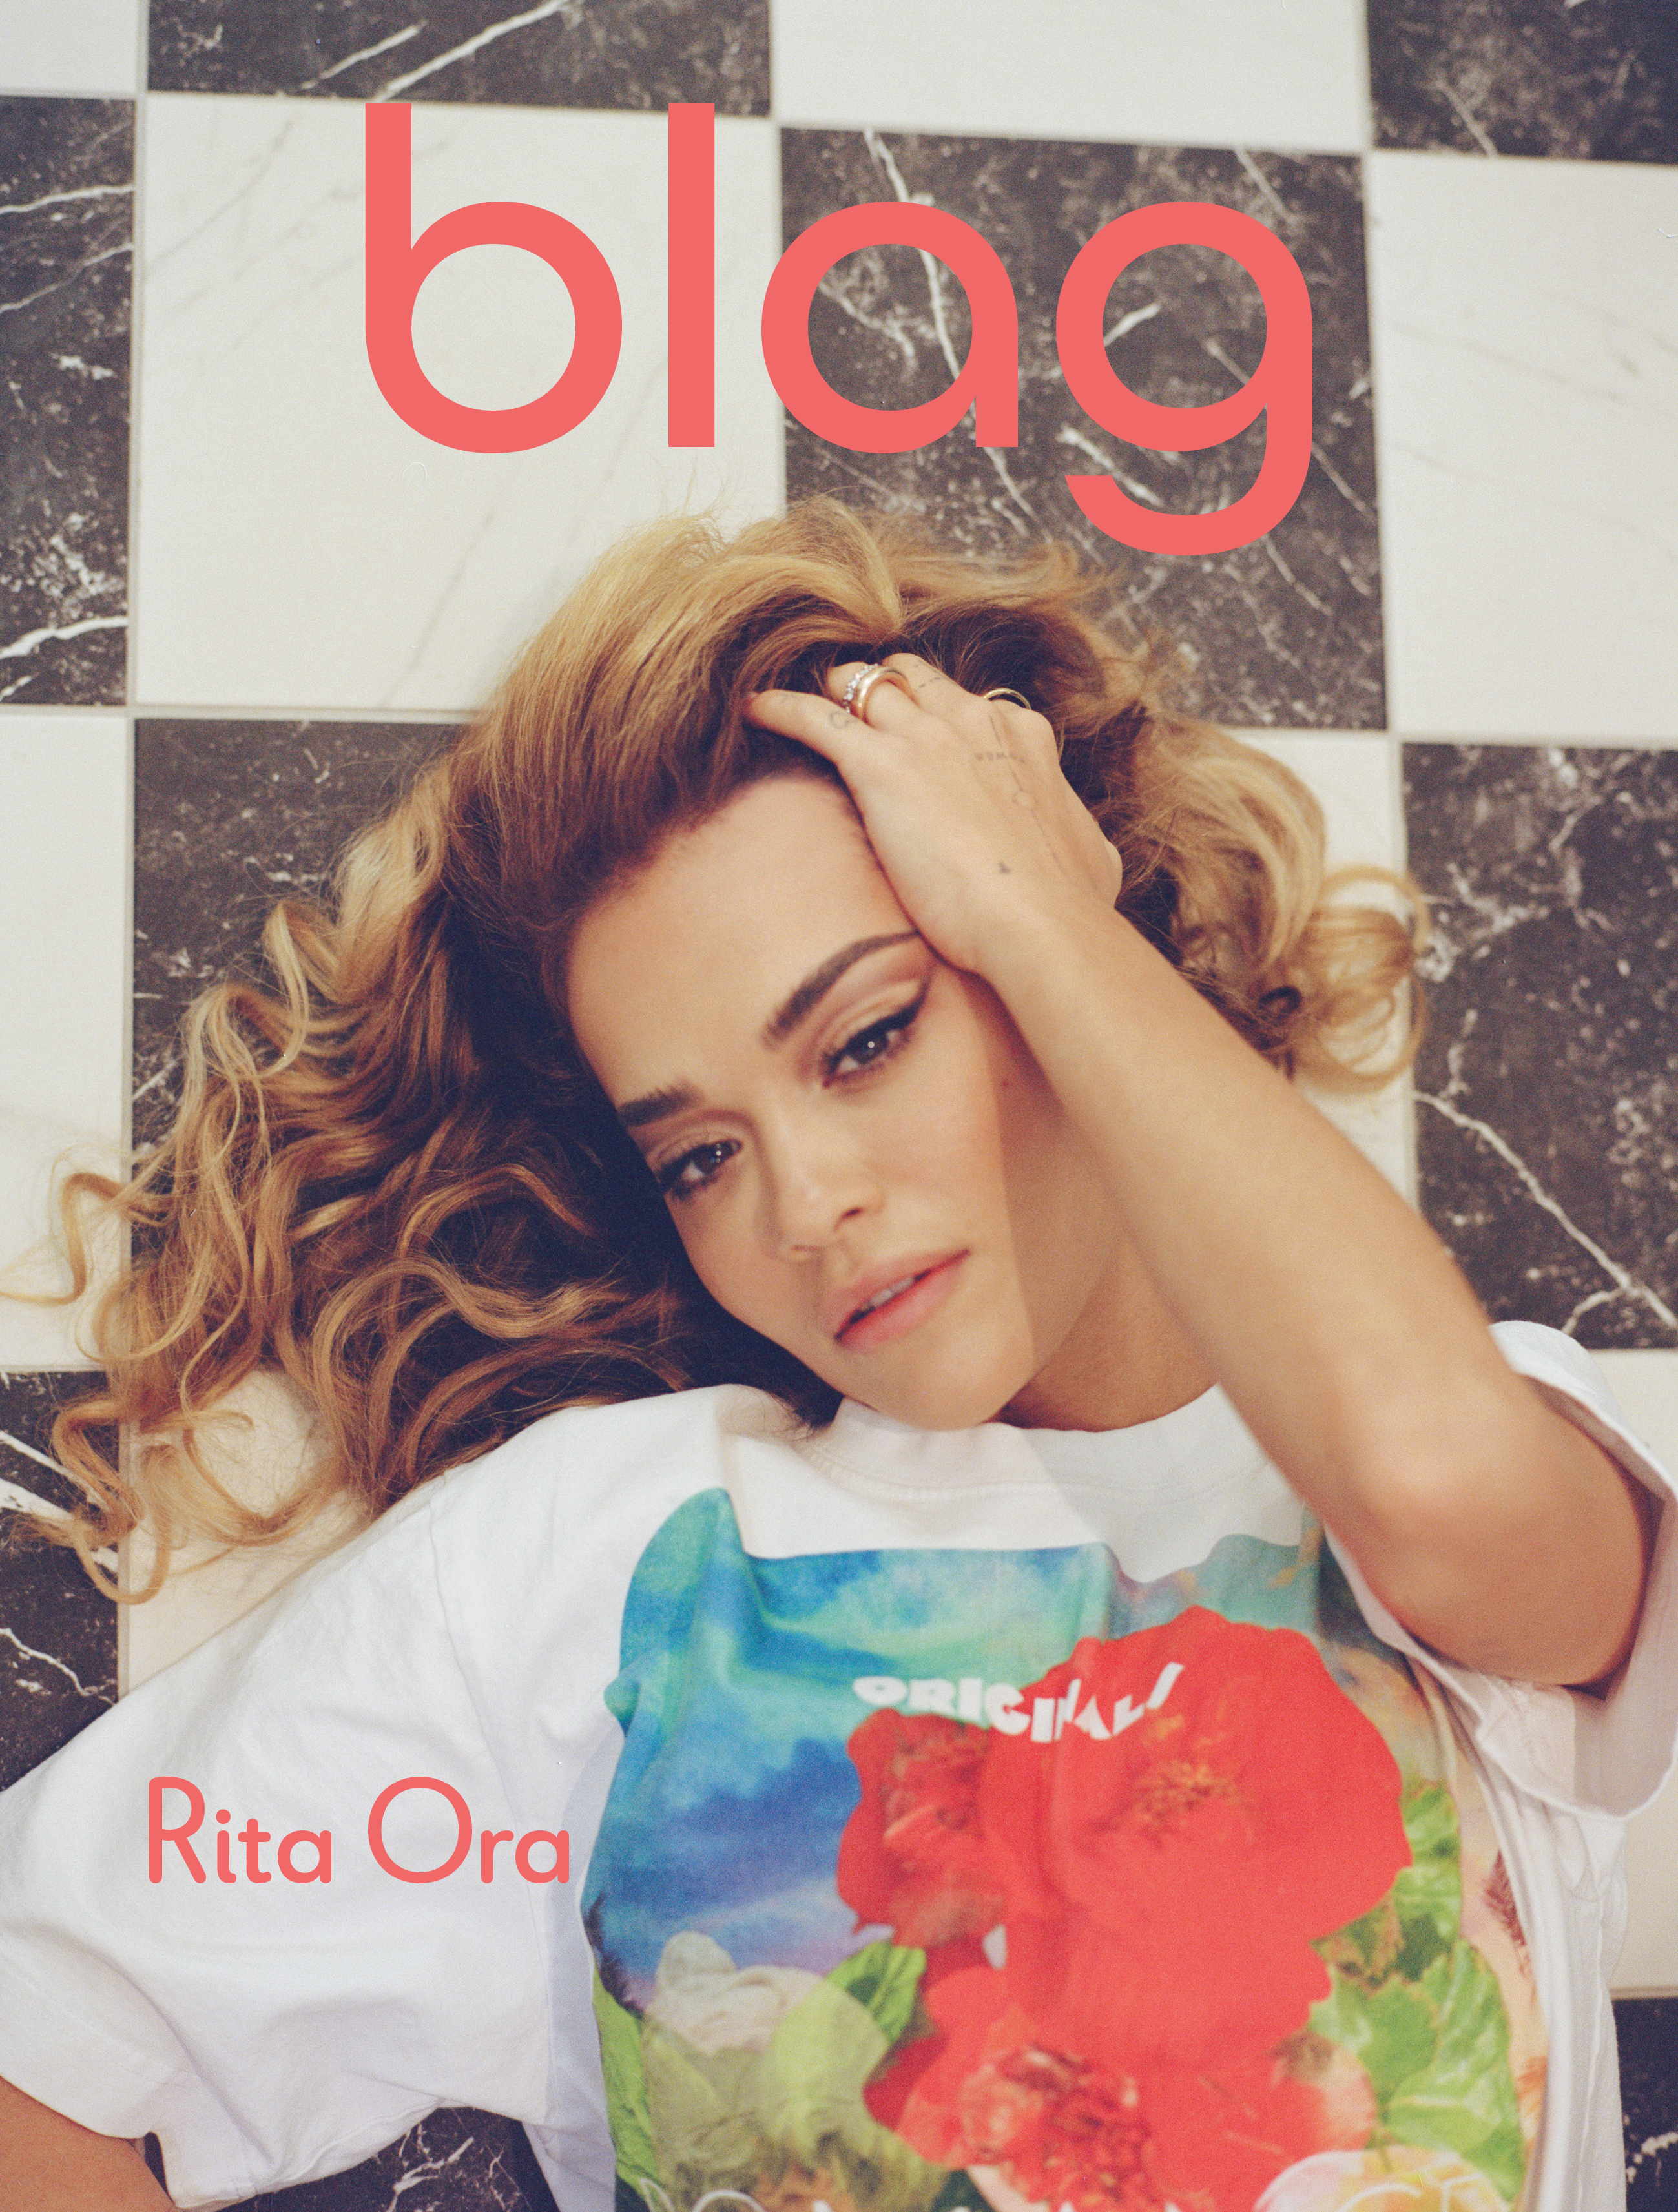 Rita Ora by Sarah J. Edwards for BLAG magazine cover